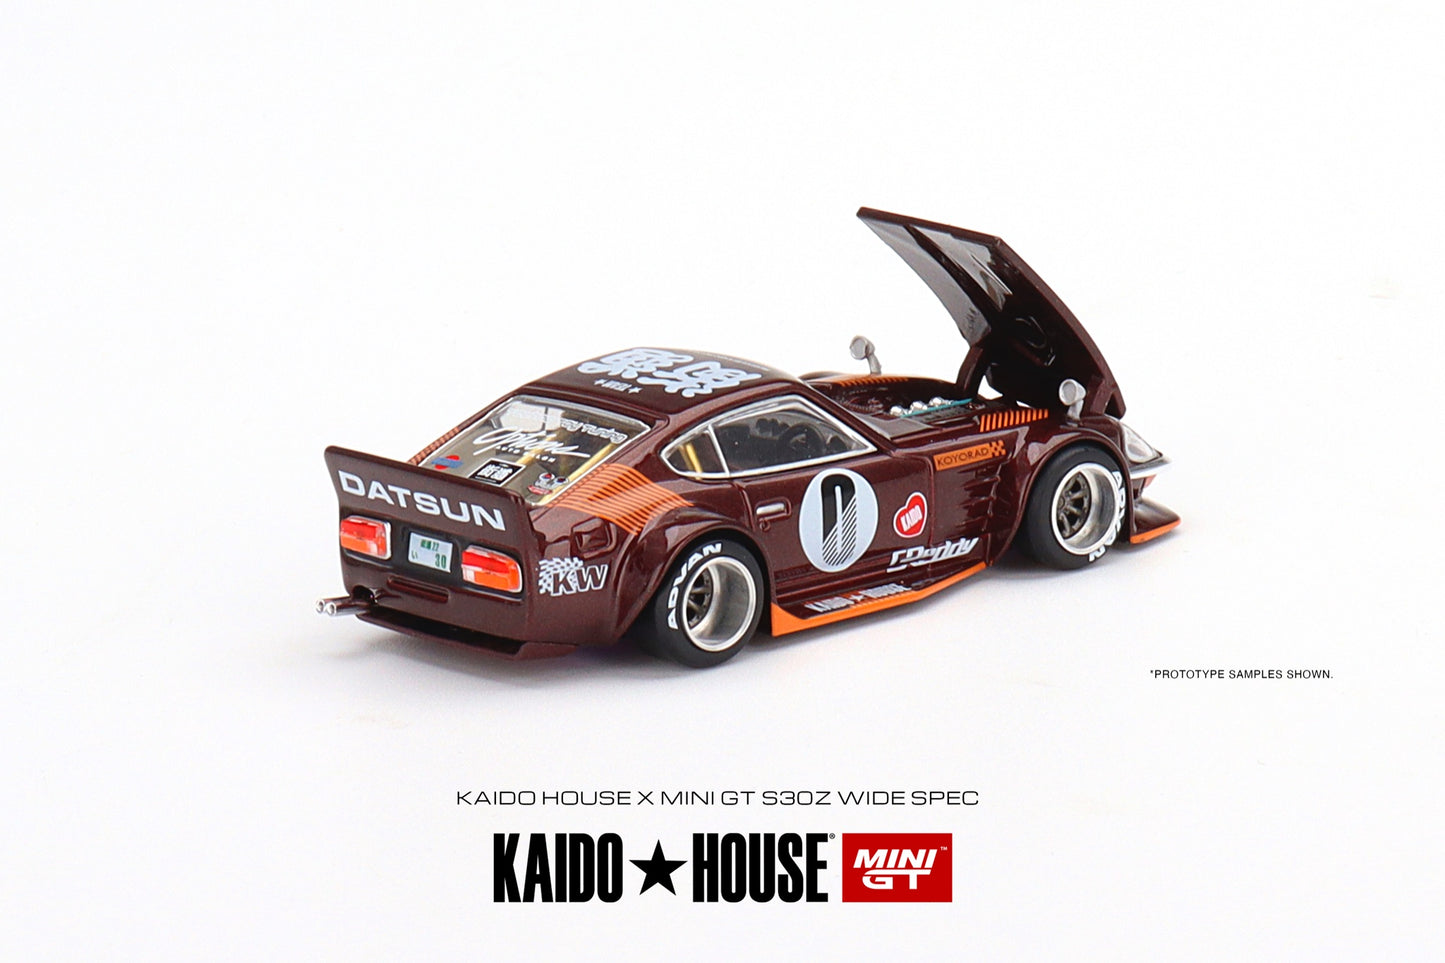 Mini GT x Kaido House Datsun S30Z Widespec in Dark Cherry Red